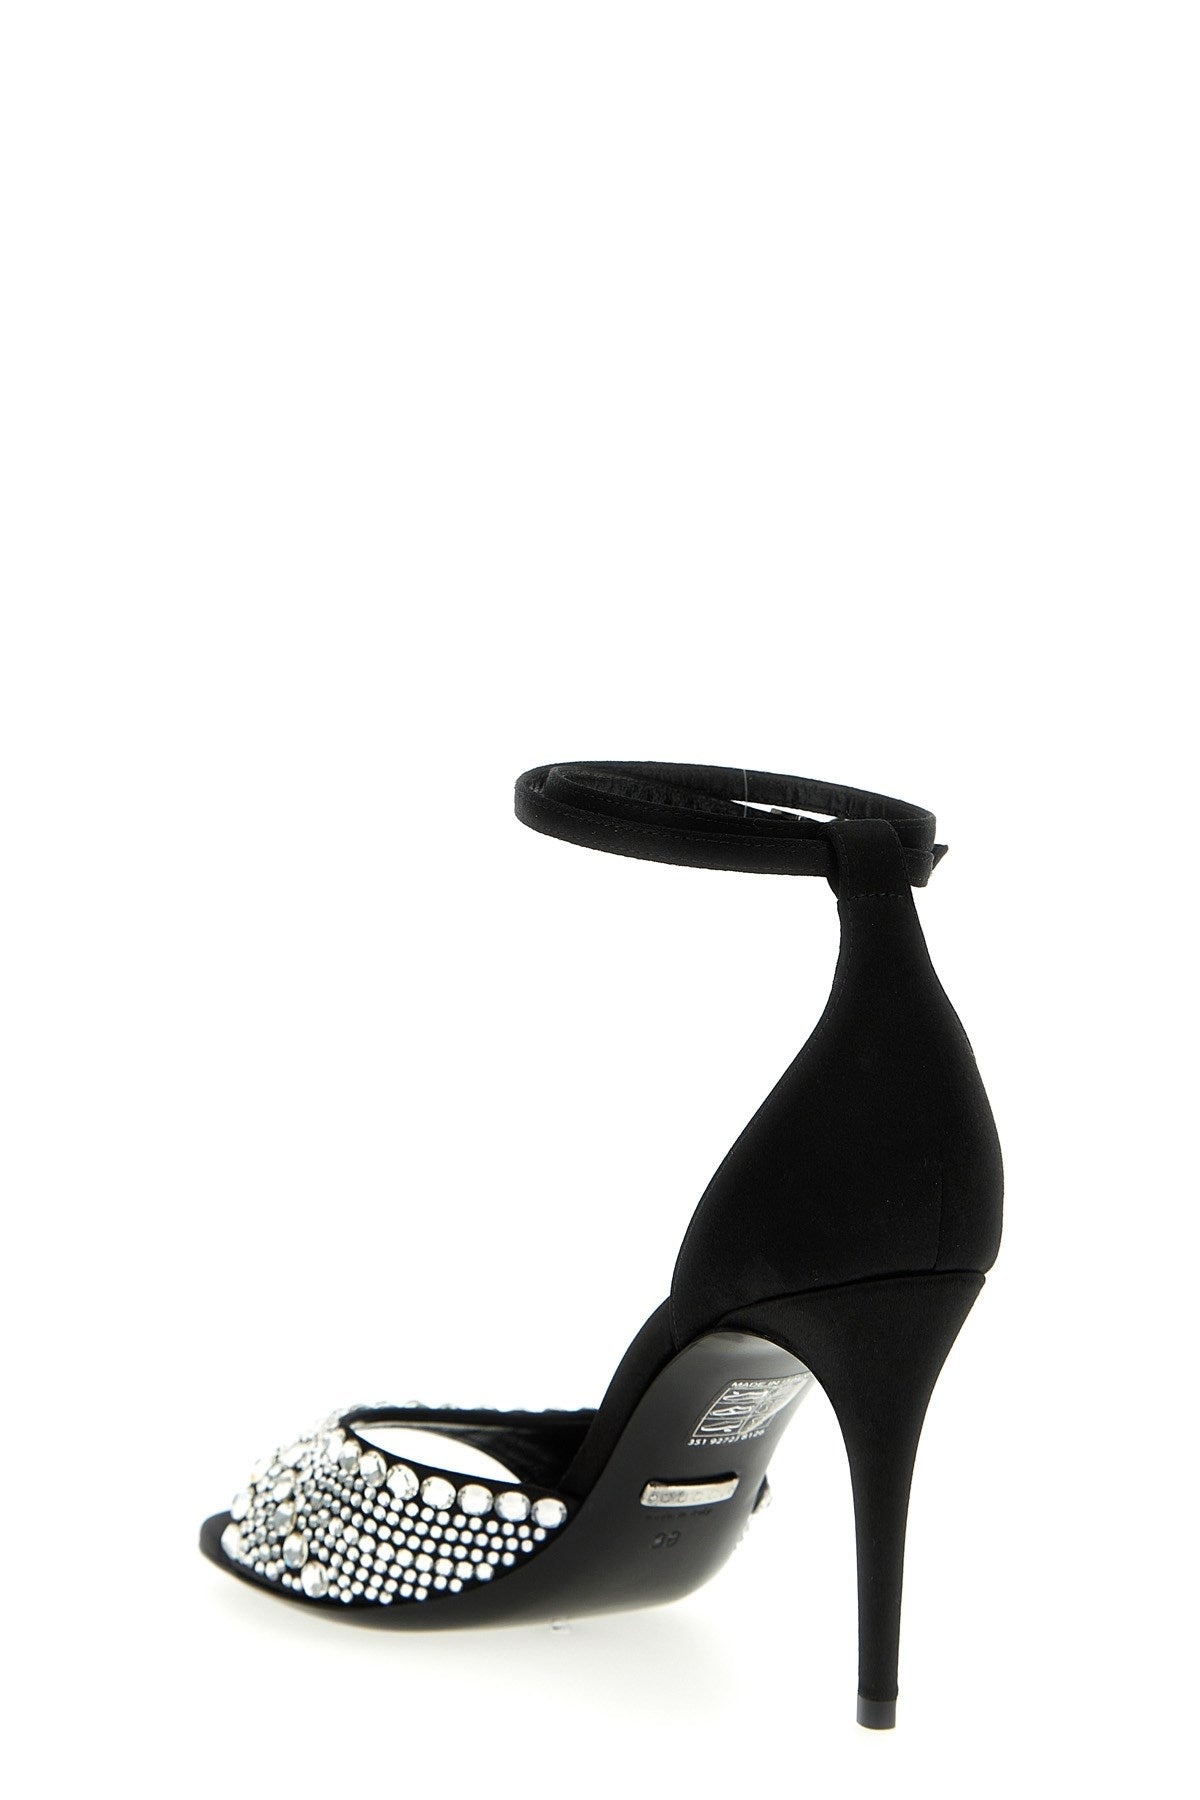 Gucci Women Crystal Satin Sandals - 2